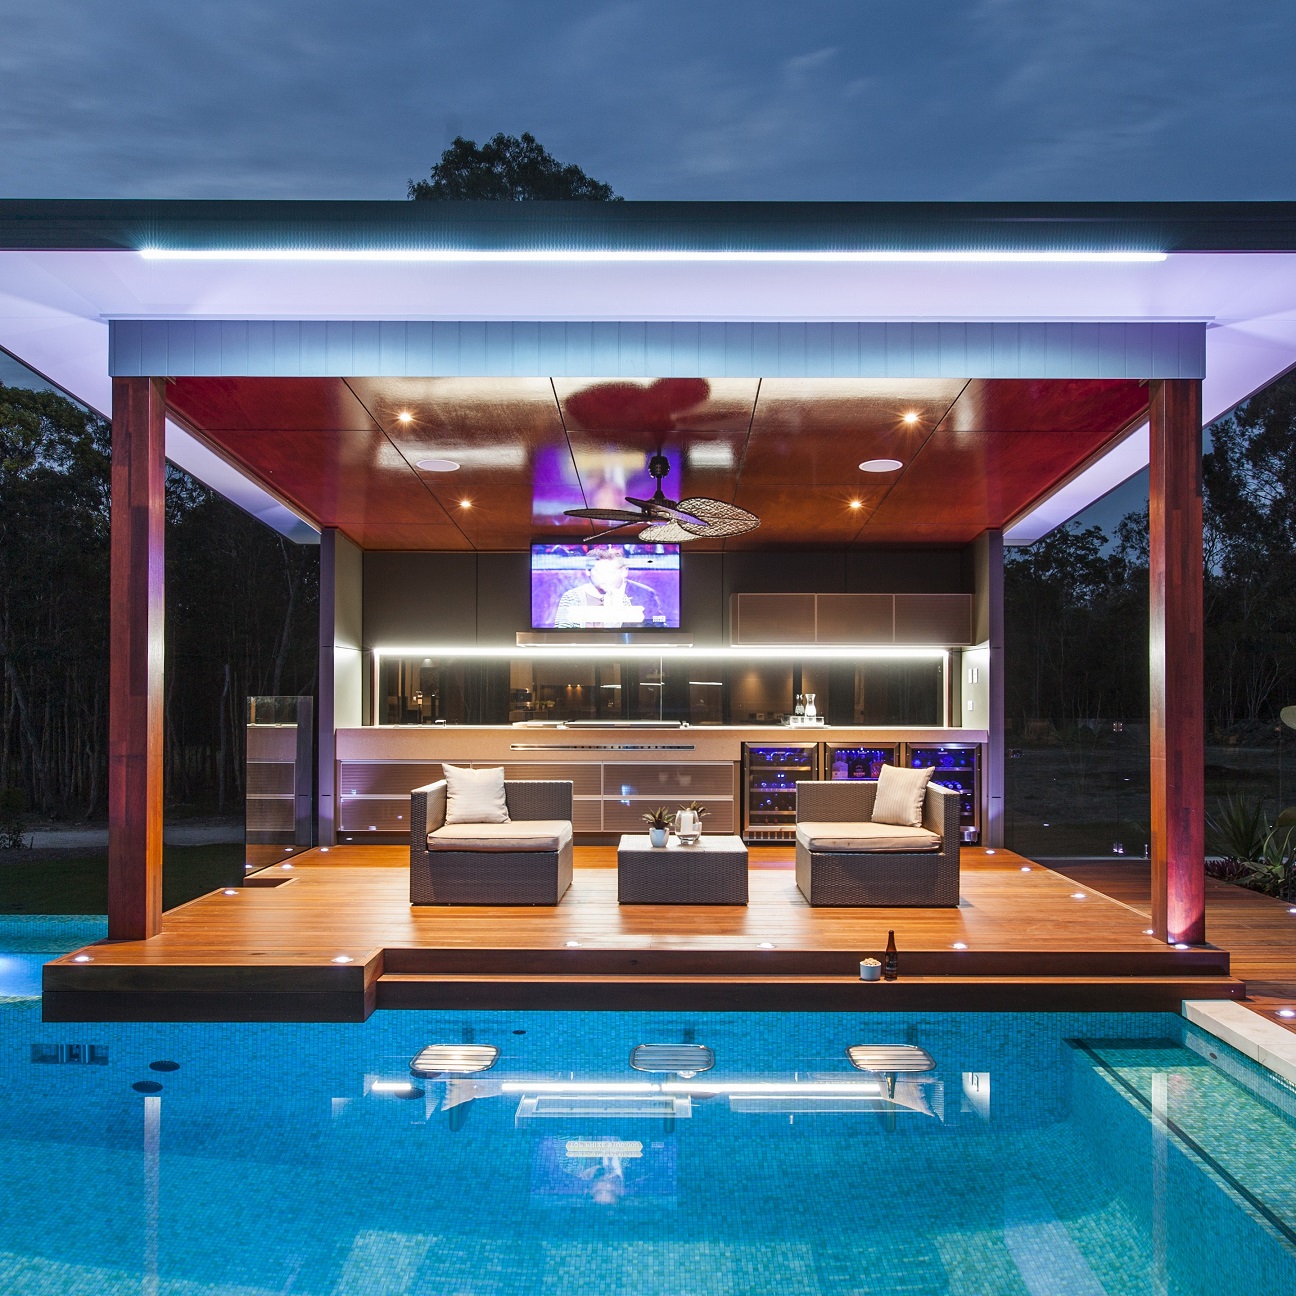 modern pool & outdoor kitchen in Best Inspiring Backyard Designs | LovelySpaces.com